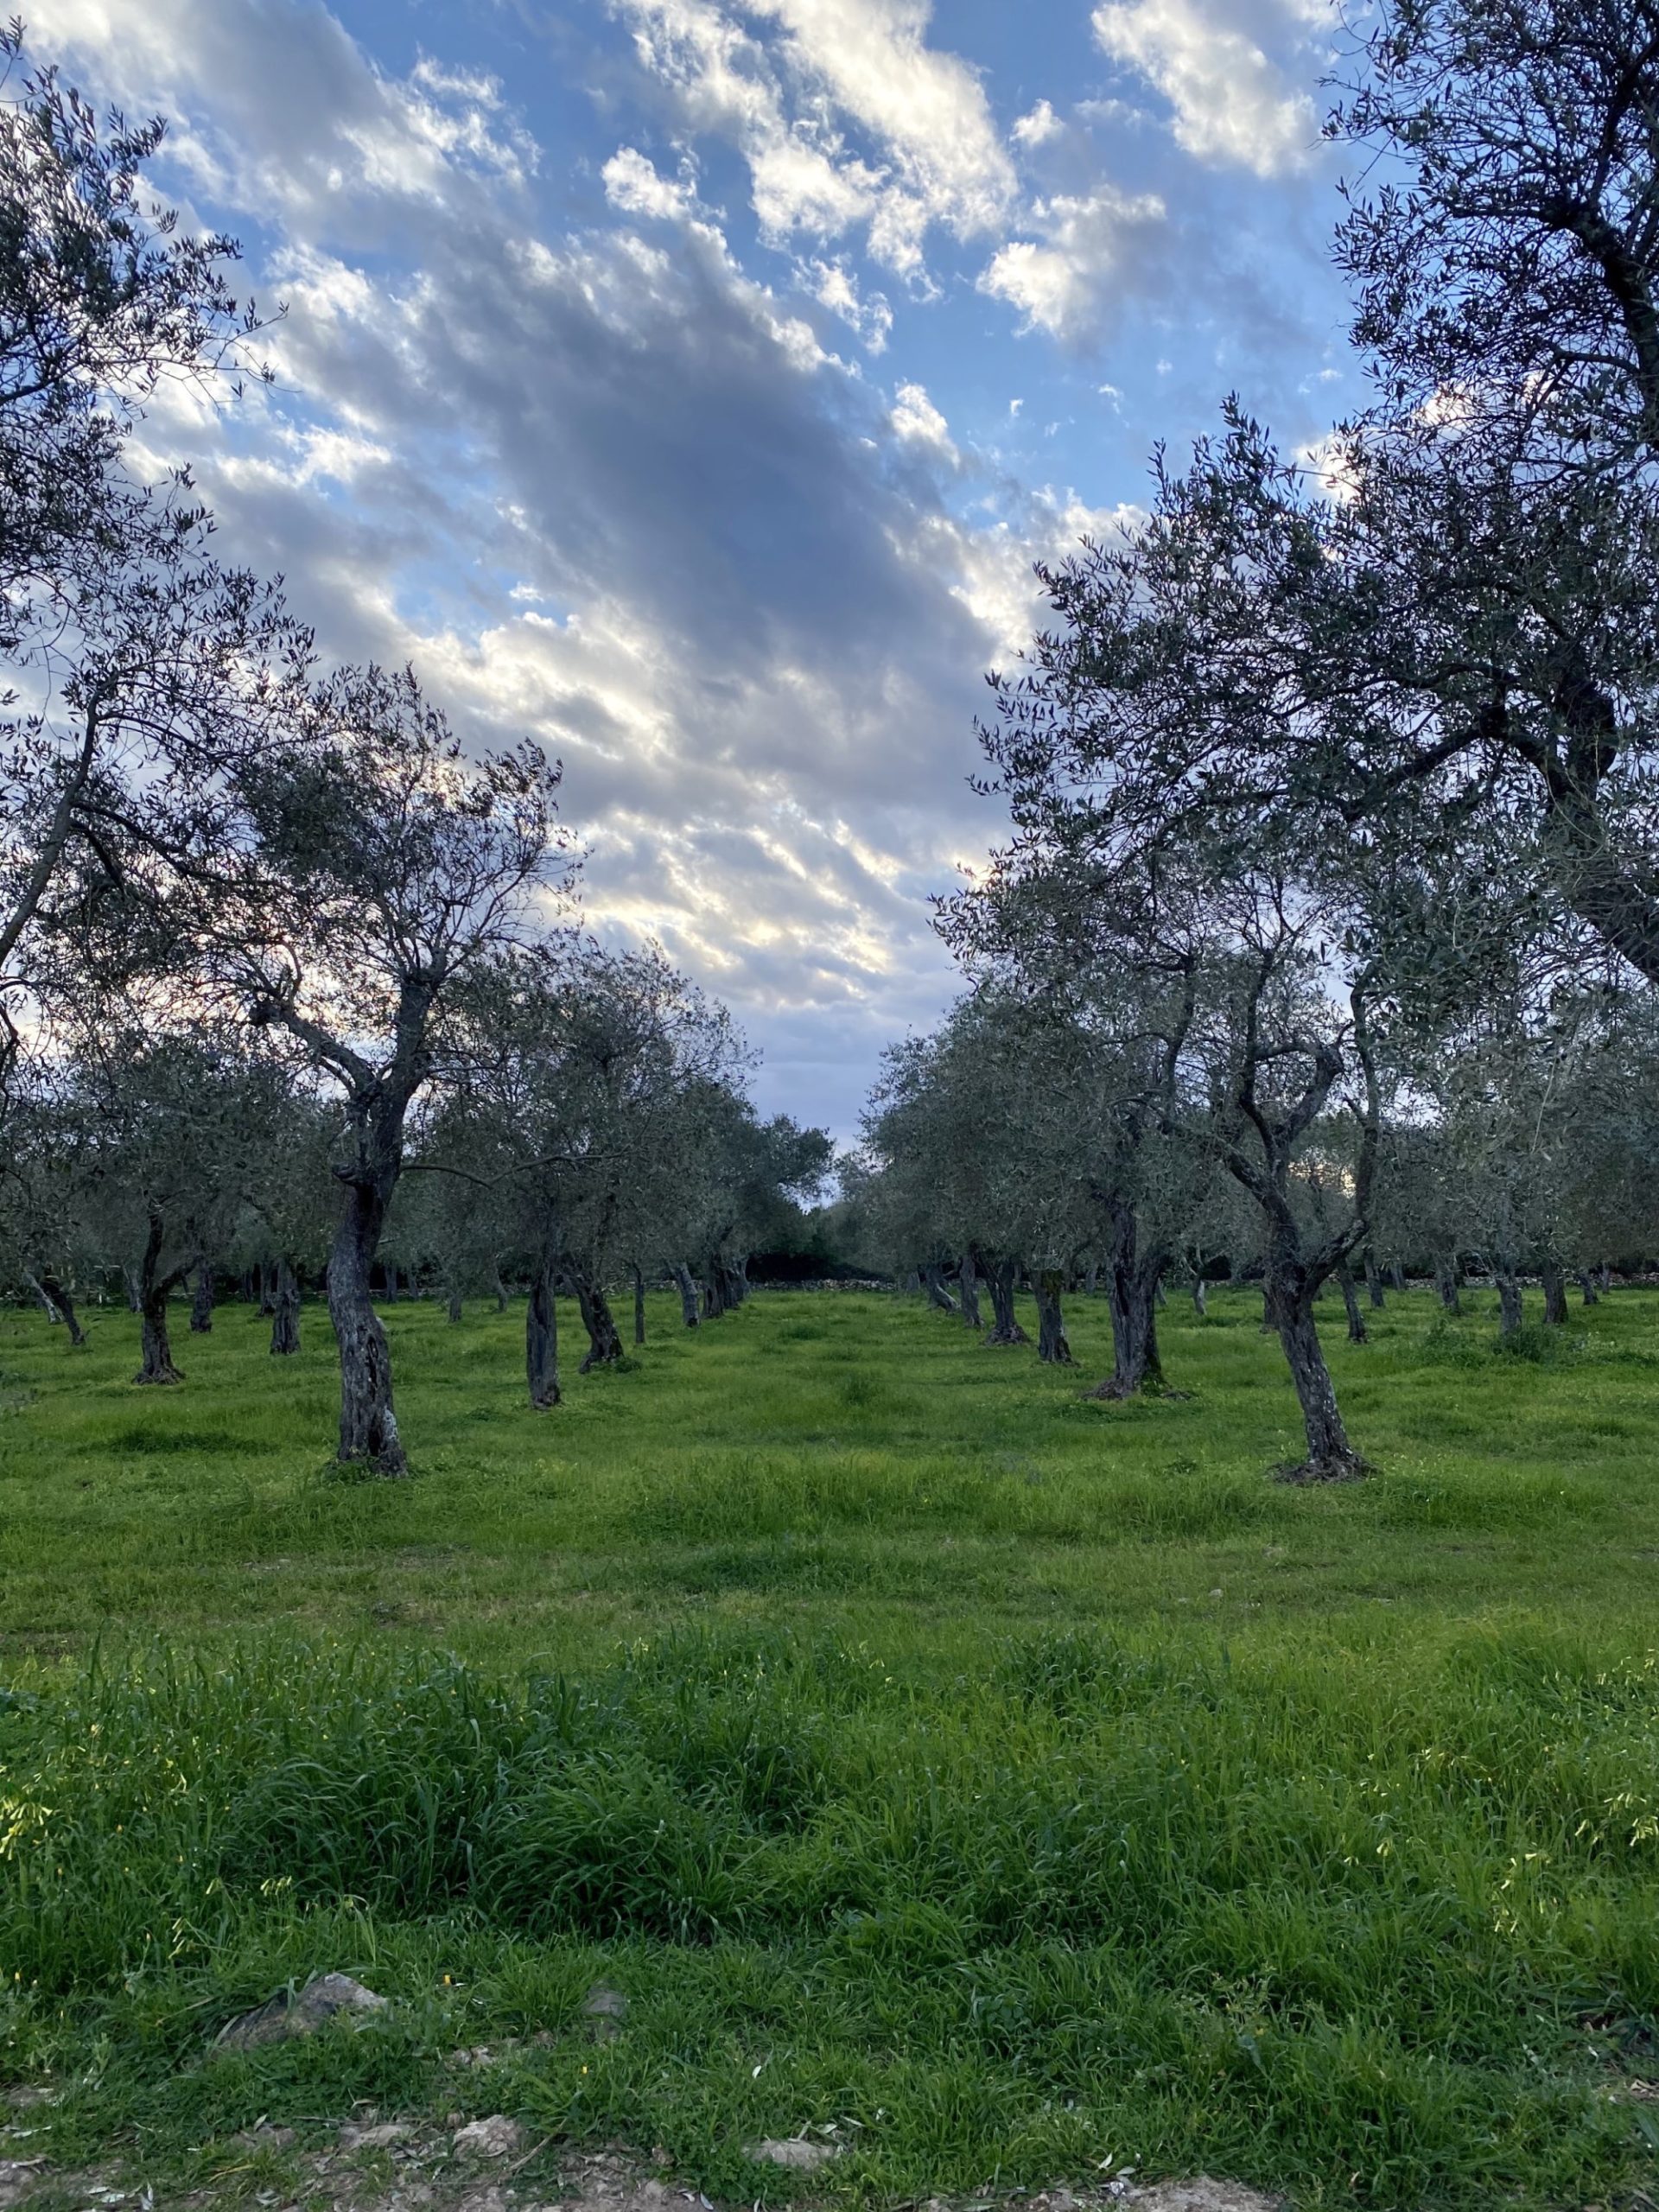 Sardegna extra virgin olive oil